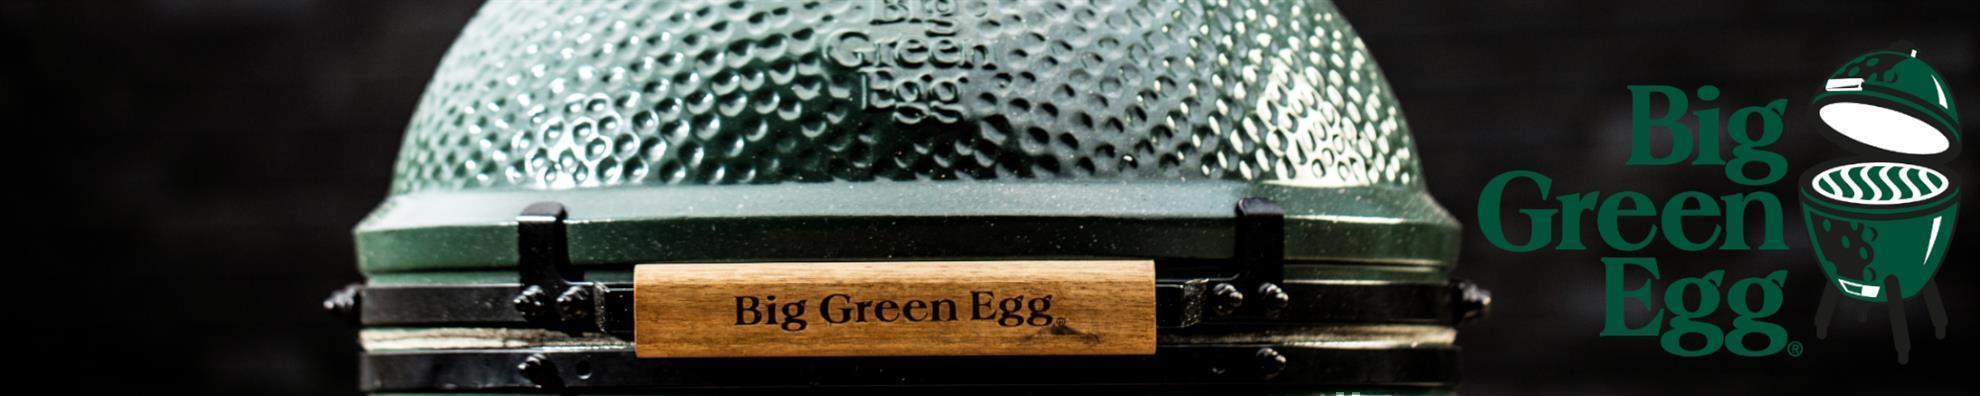 Big Green Egg - Medium Egg